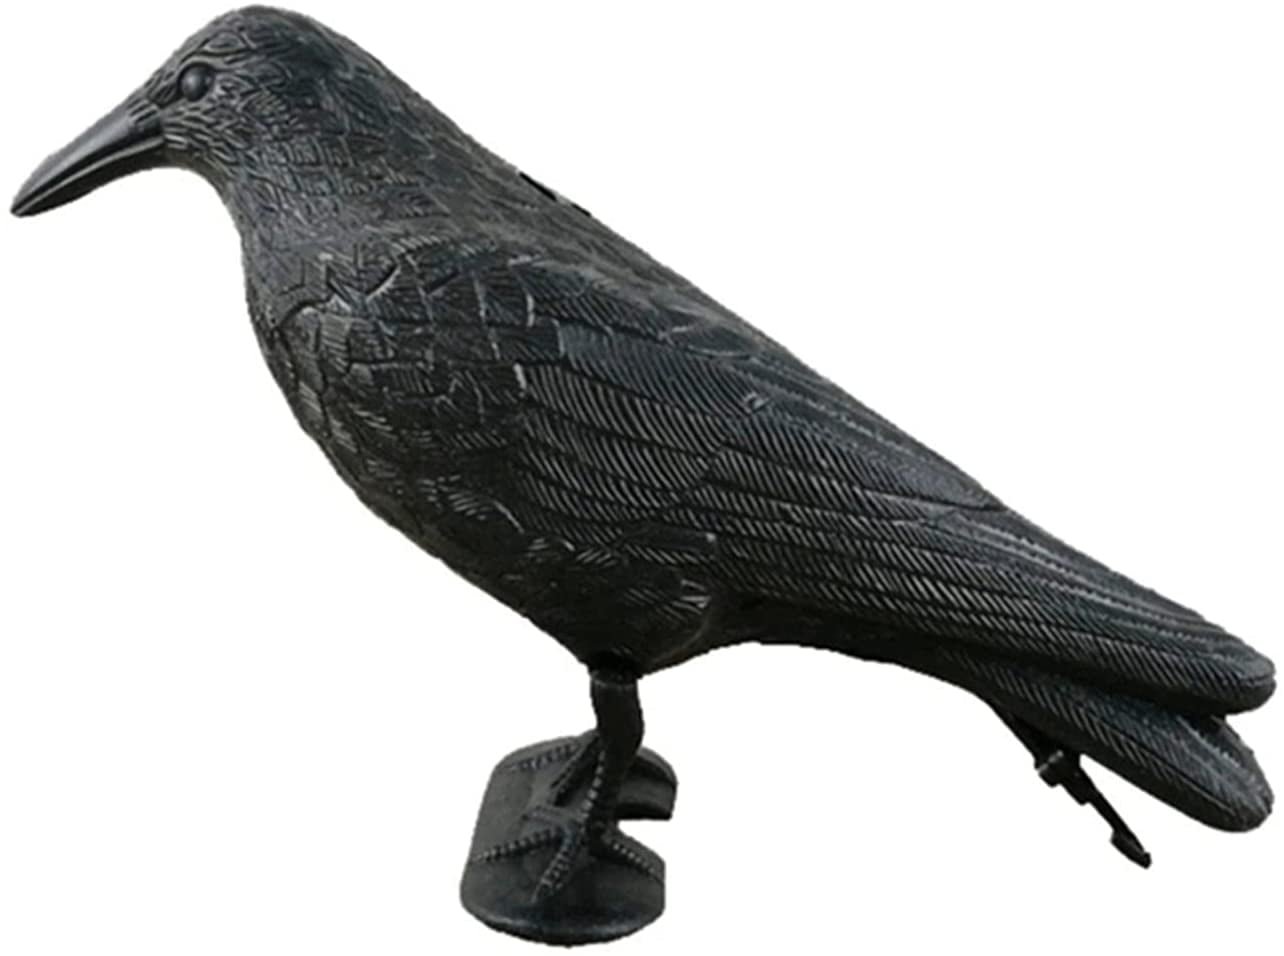 Lifelike Black Crow Decoying Bird Figurine Statue Flying Crow Halloween Deco 